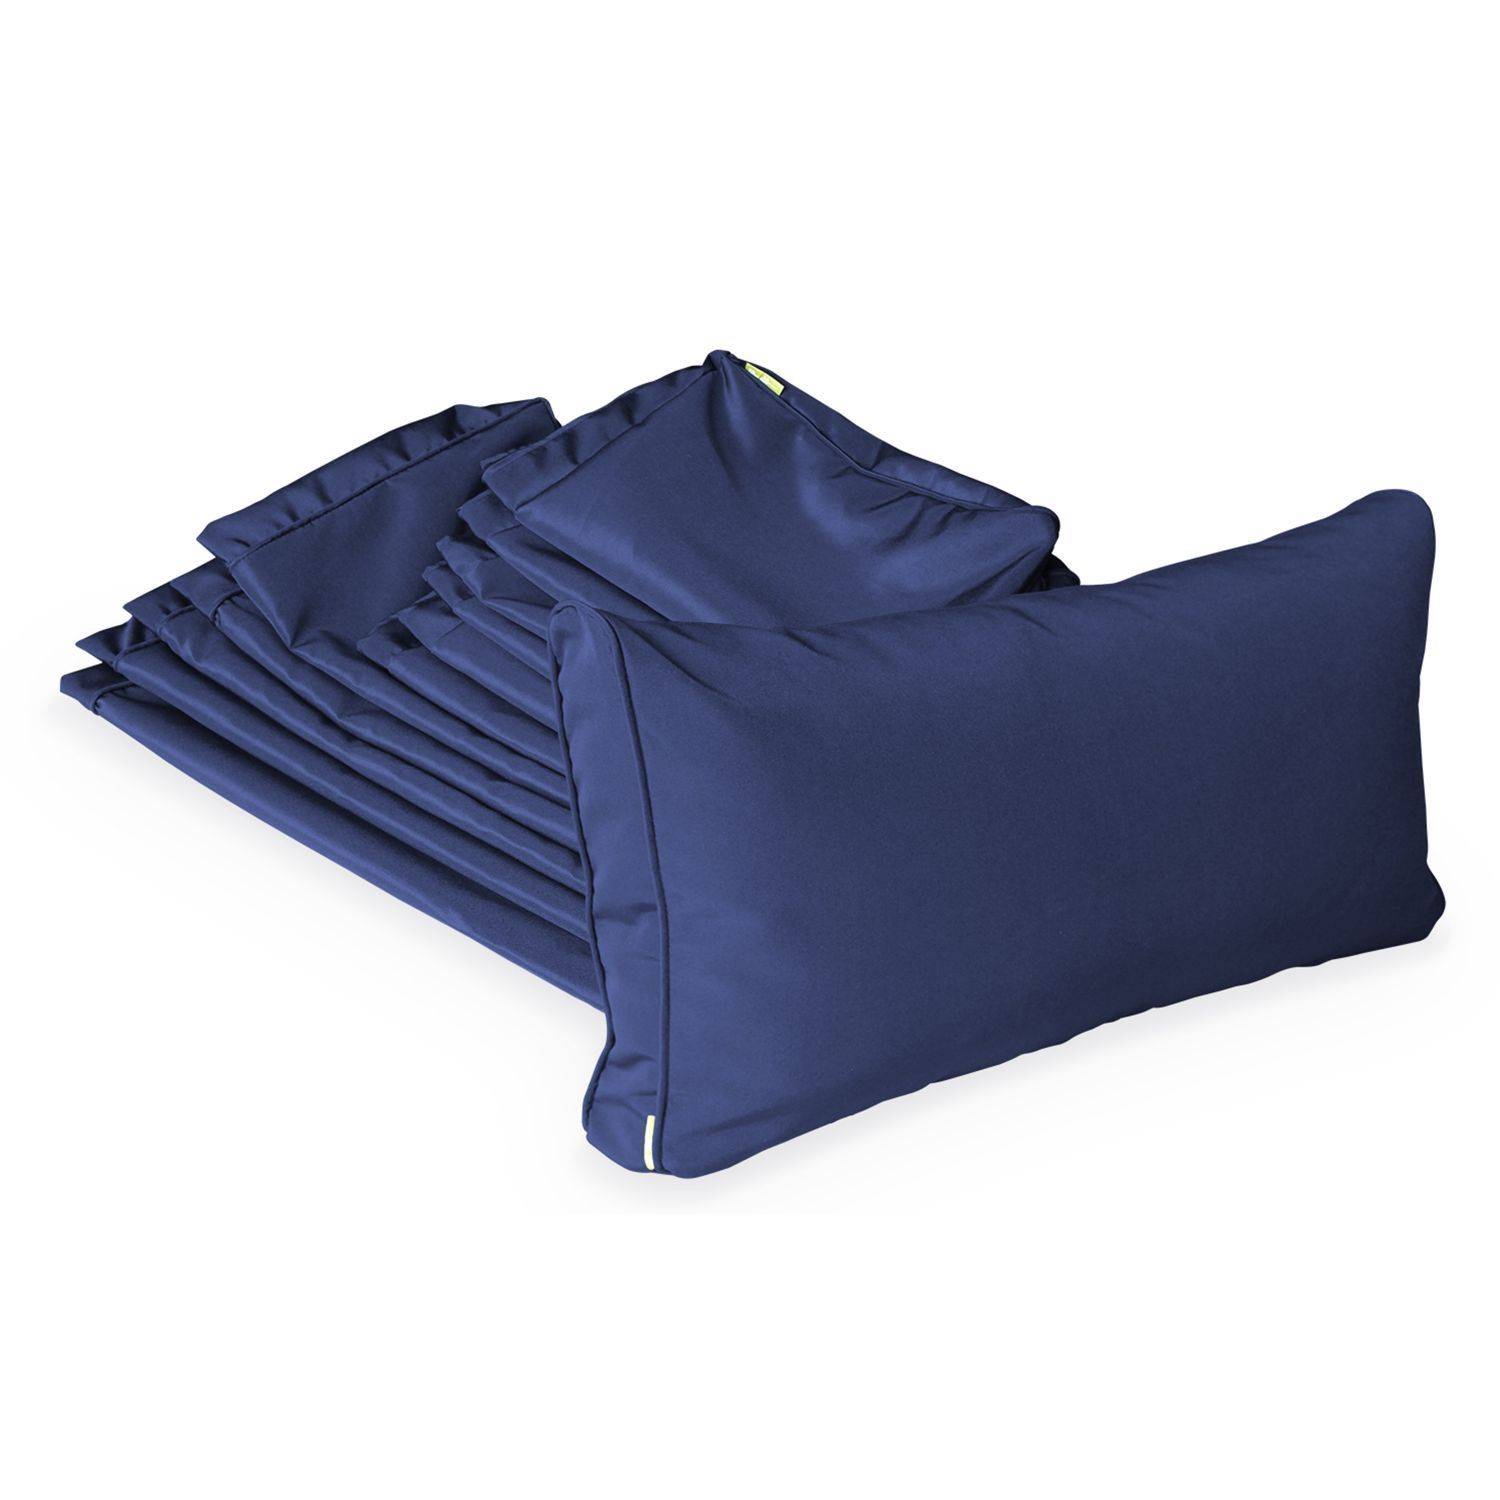 Blue cushion cover set for Napoli garden set - complete set Photo1